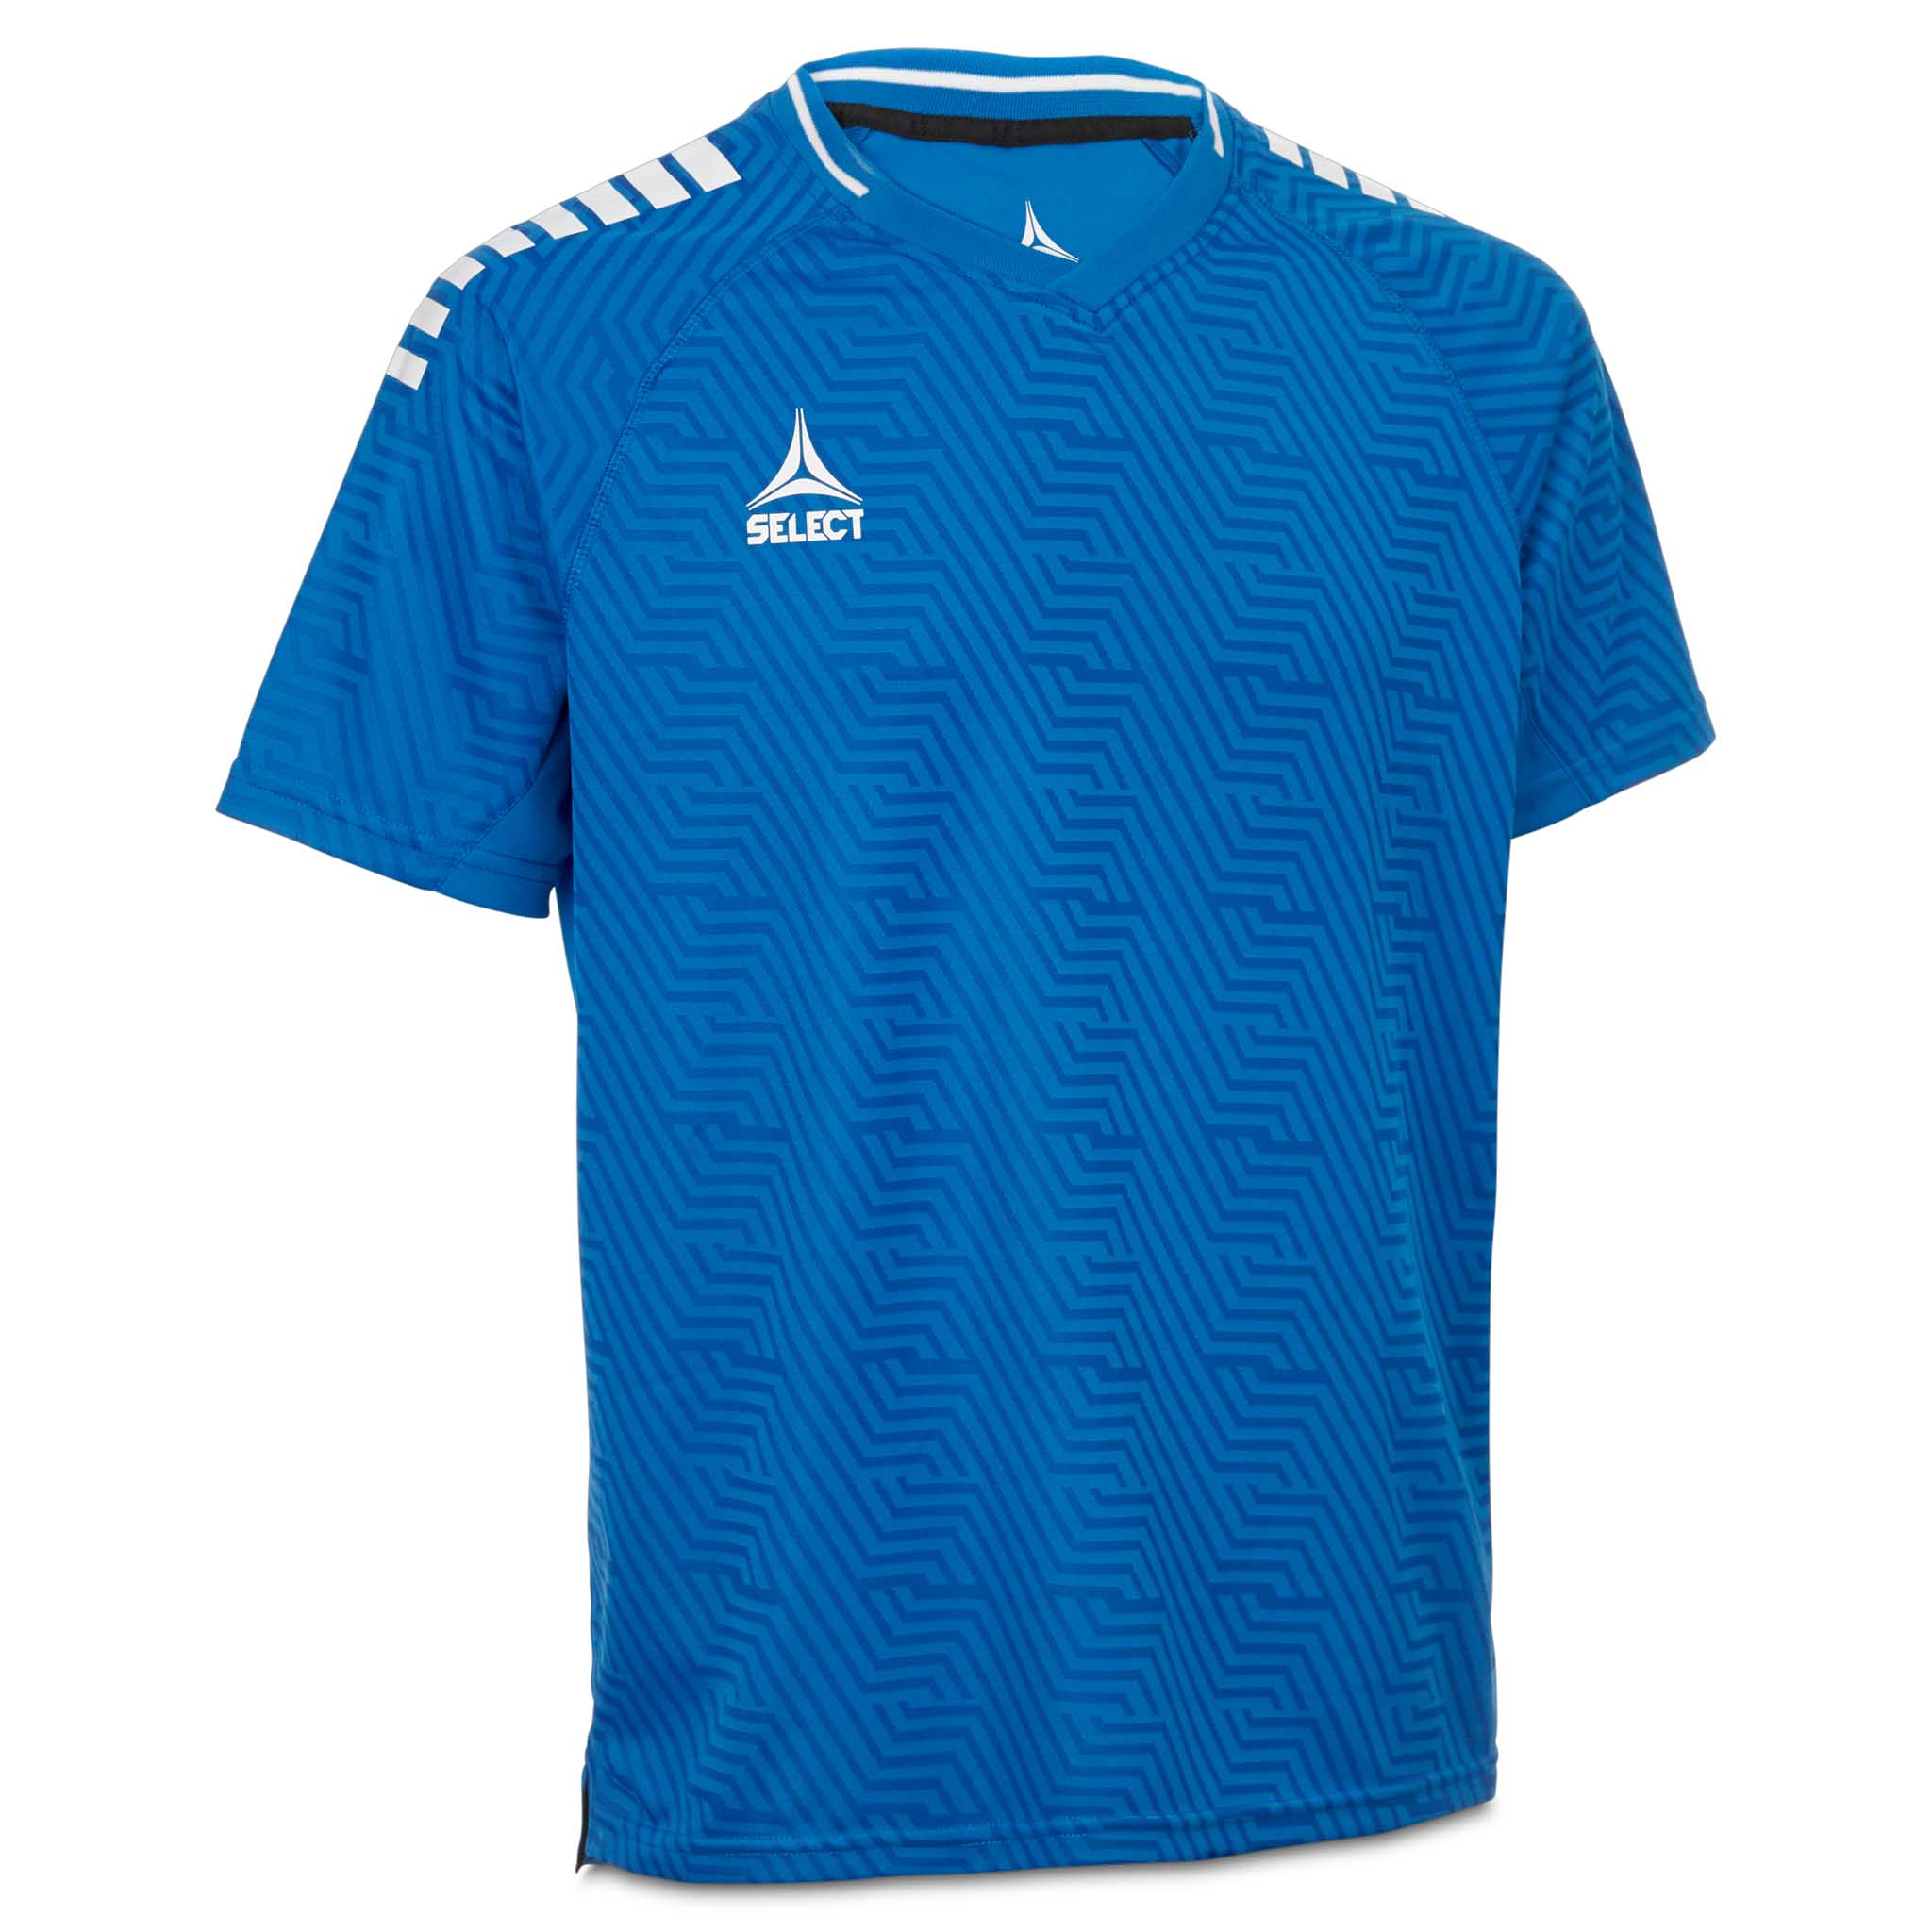 Monaco Player shirt S/S #colour_blue/white